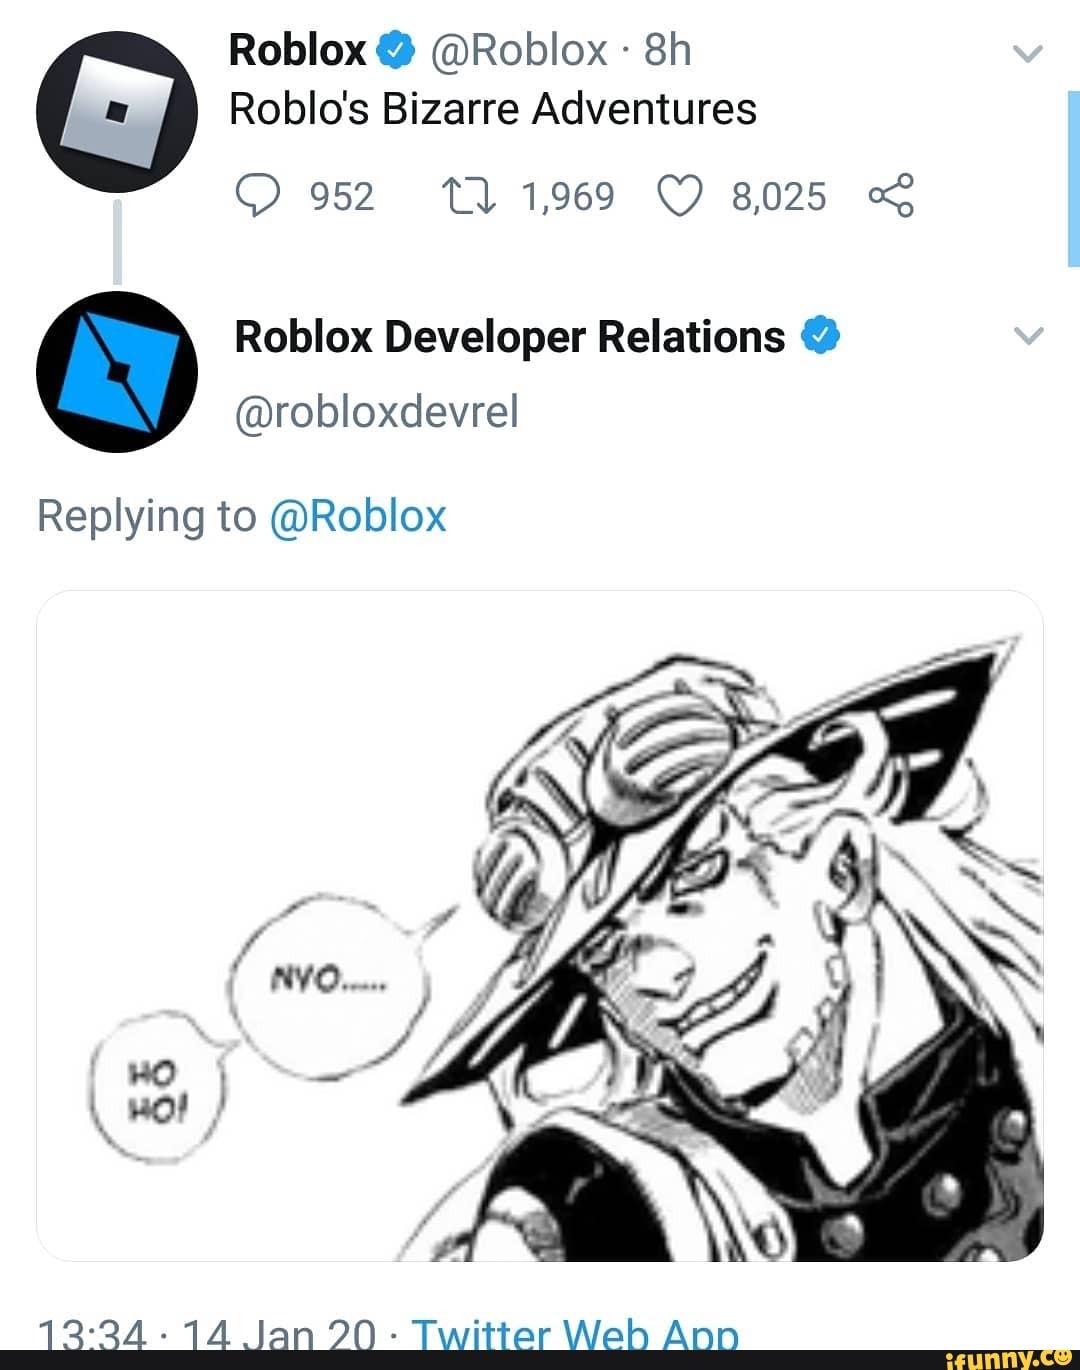 Roblo S Bizarre Adventures Roblox Developer Relations Robloxdevrel Replying To Roblox 12 24 14 Jan 20 Twitter Web Ann Ifunny - roblox developer relations twitter